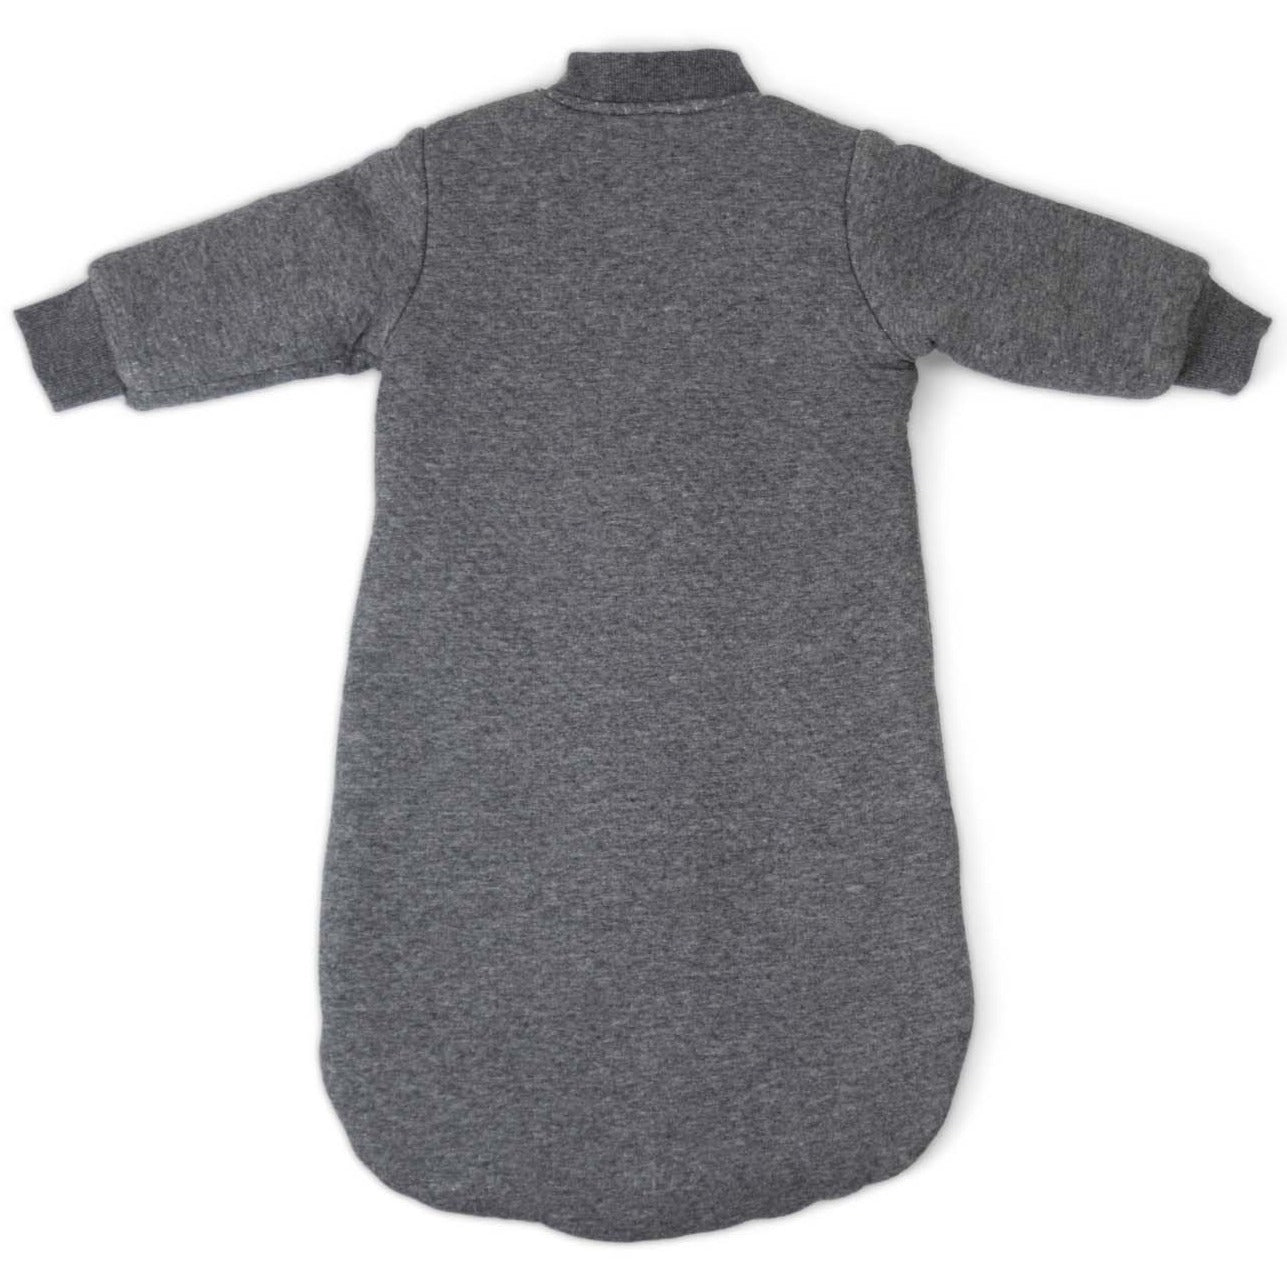 Charcoal Sleeping Bag with Arms 3.0TOG (18-36 Months) | babystudio